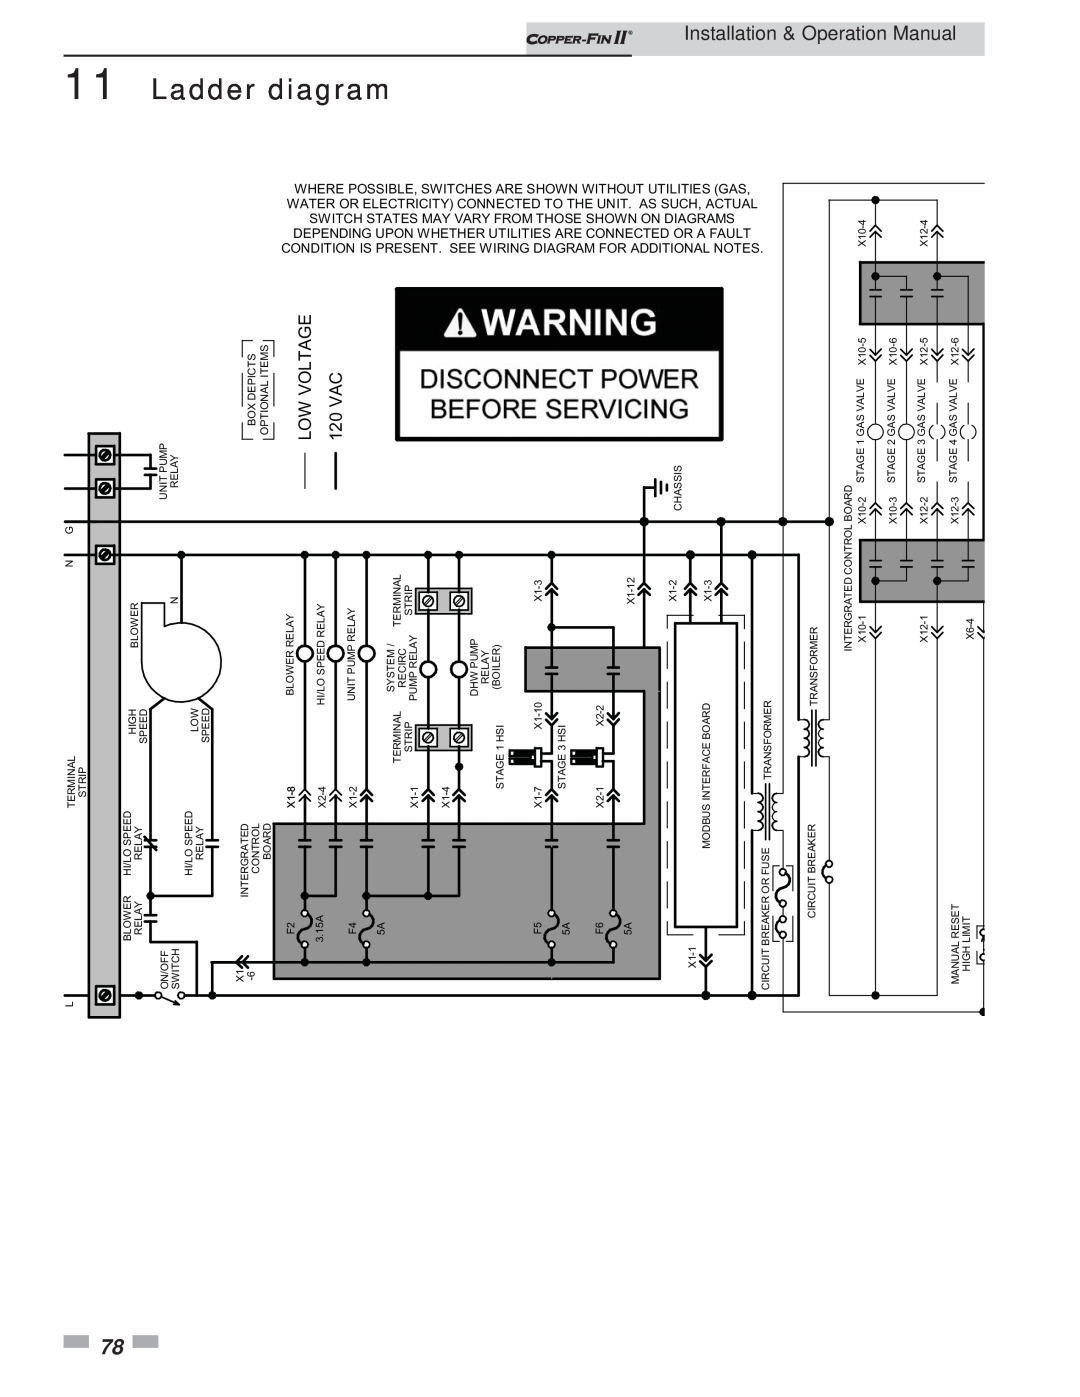 Lochinvar 402 - 2072 operation manual Ladder, diagram, Installation, Manual, Low Voltage, 120 VAC, Operation 